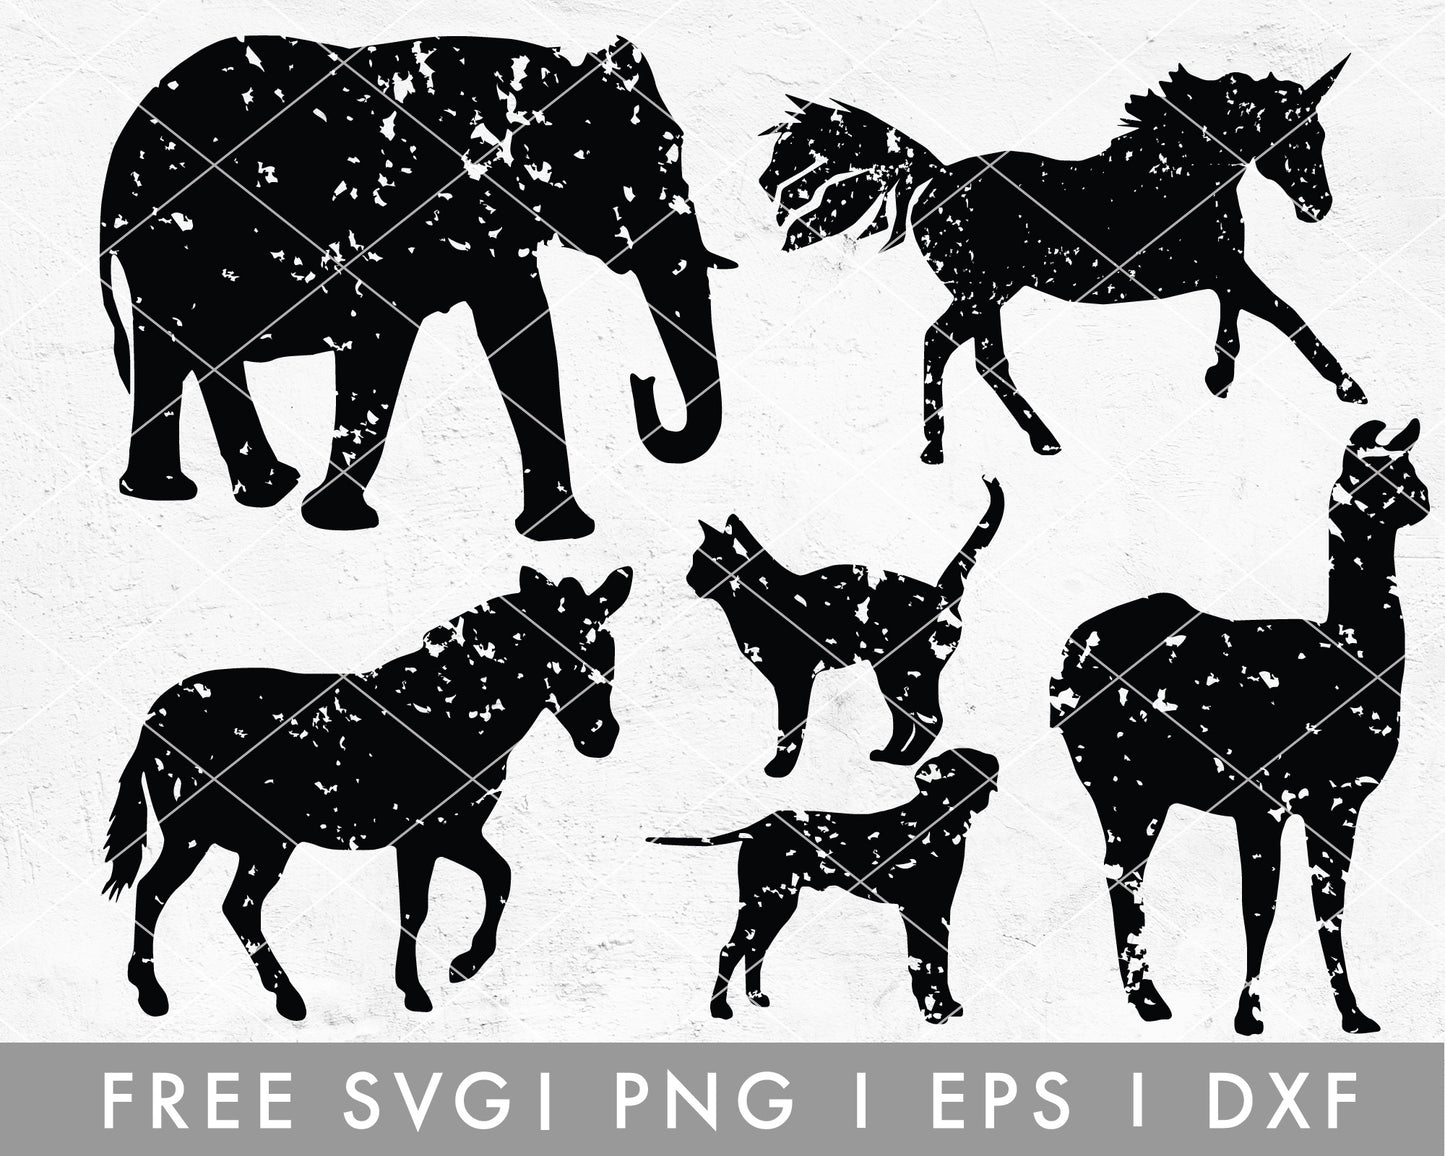 FREE FREE Animal Silhouette SVG | Distressed Animal Silhouette SVG Cut File for Cricut, Cameo Silhouette | Free SVG Cut File